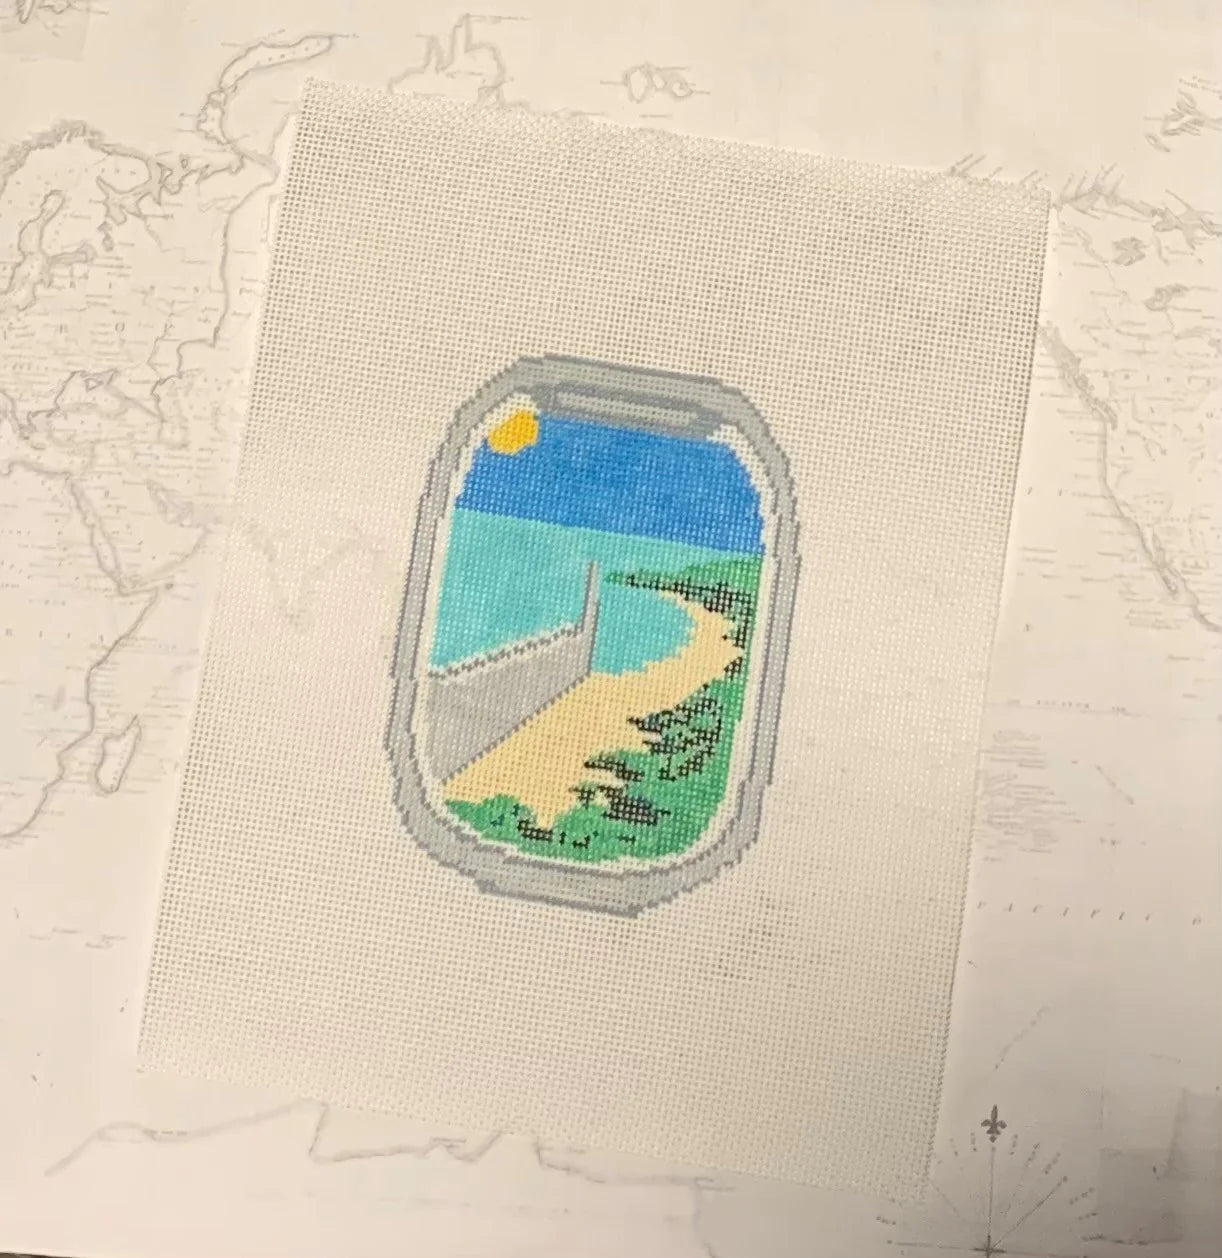 Airplane Window-Island